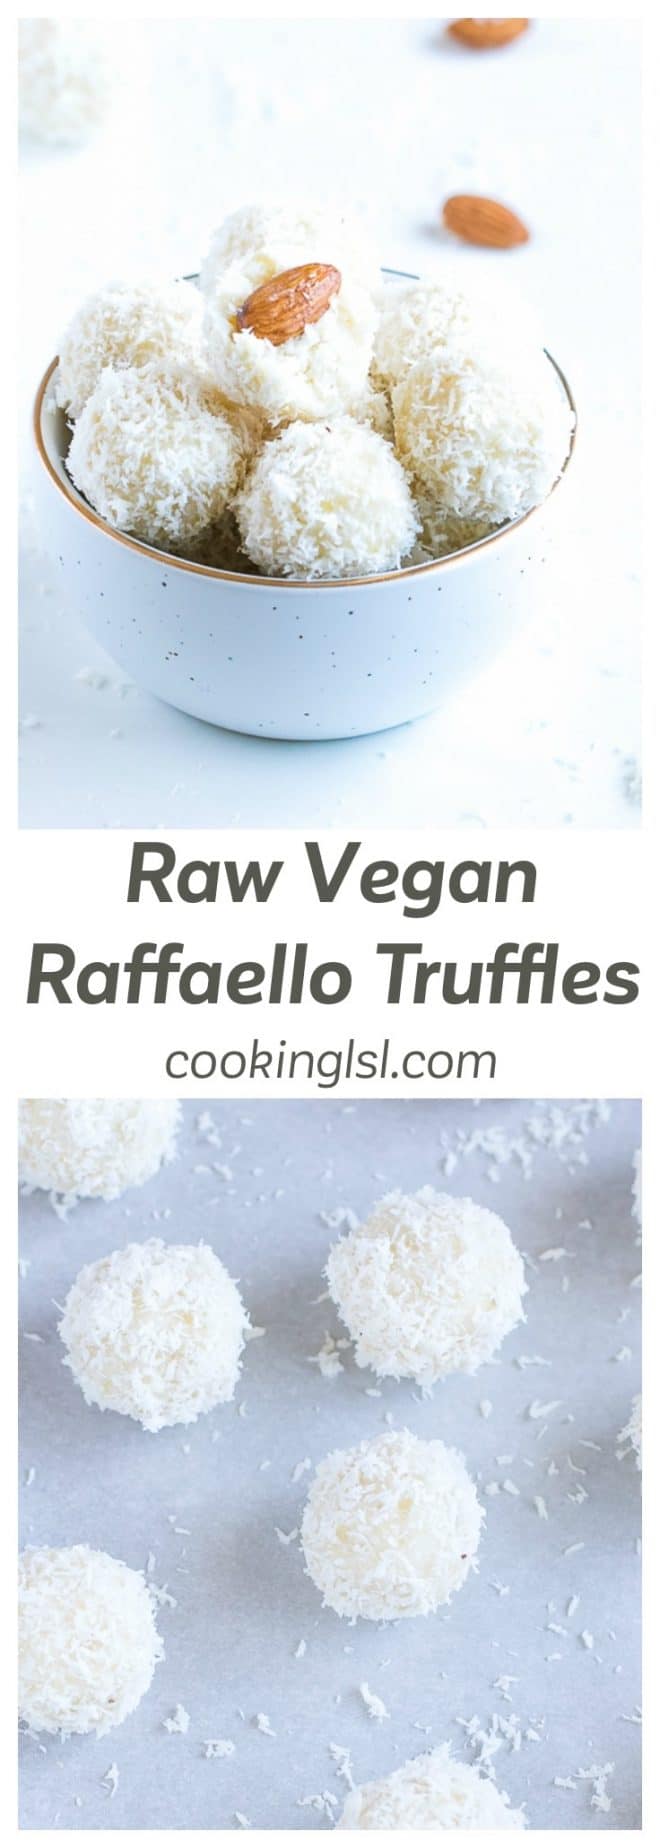 Raw Vegan Raffaello Truffles Recipe